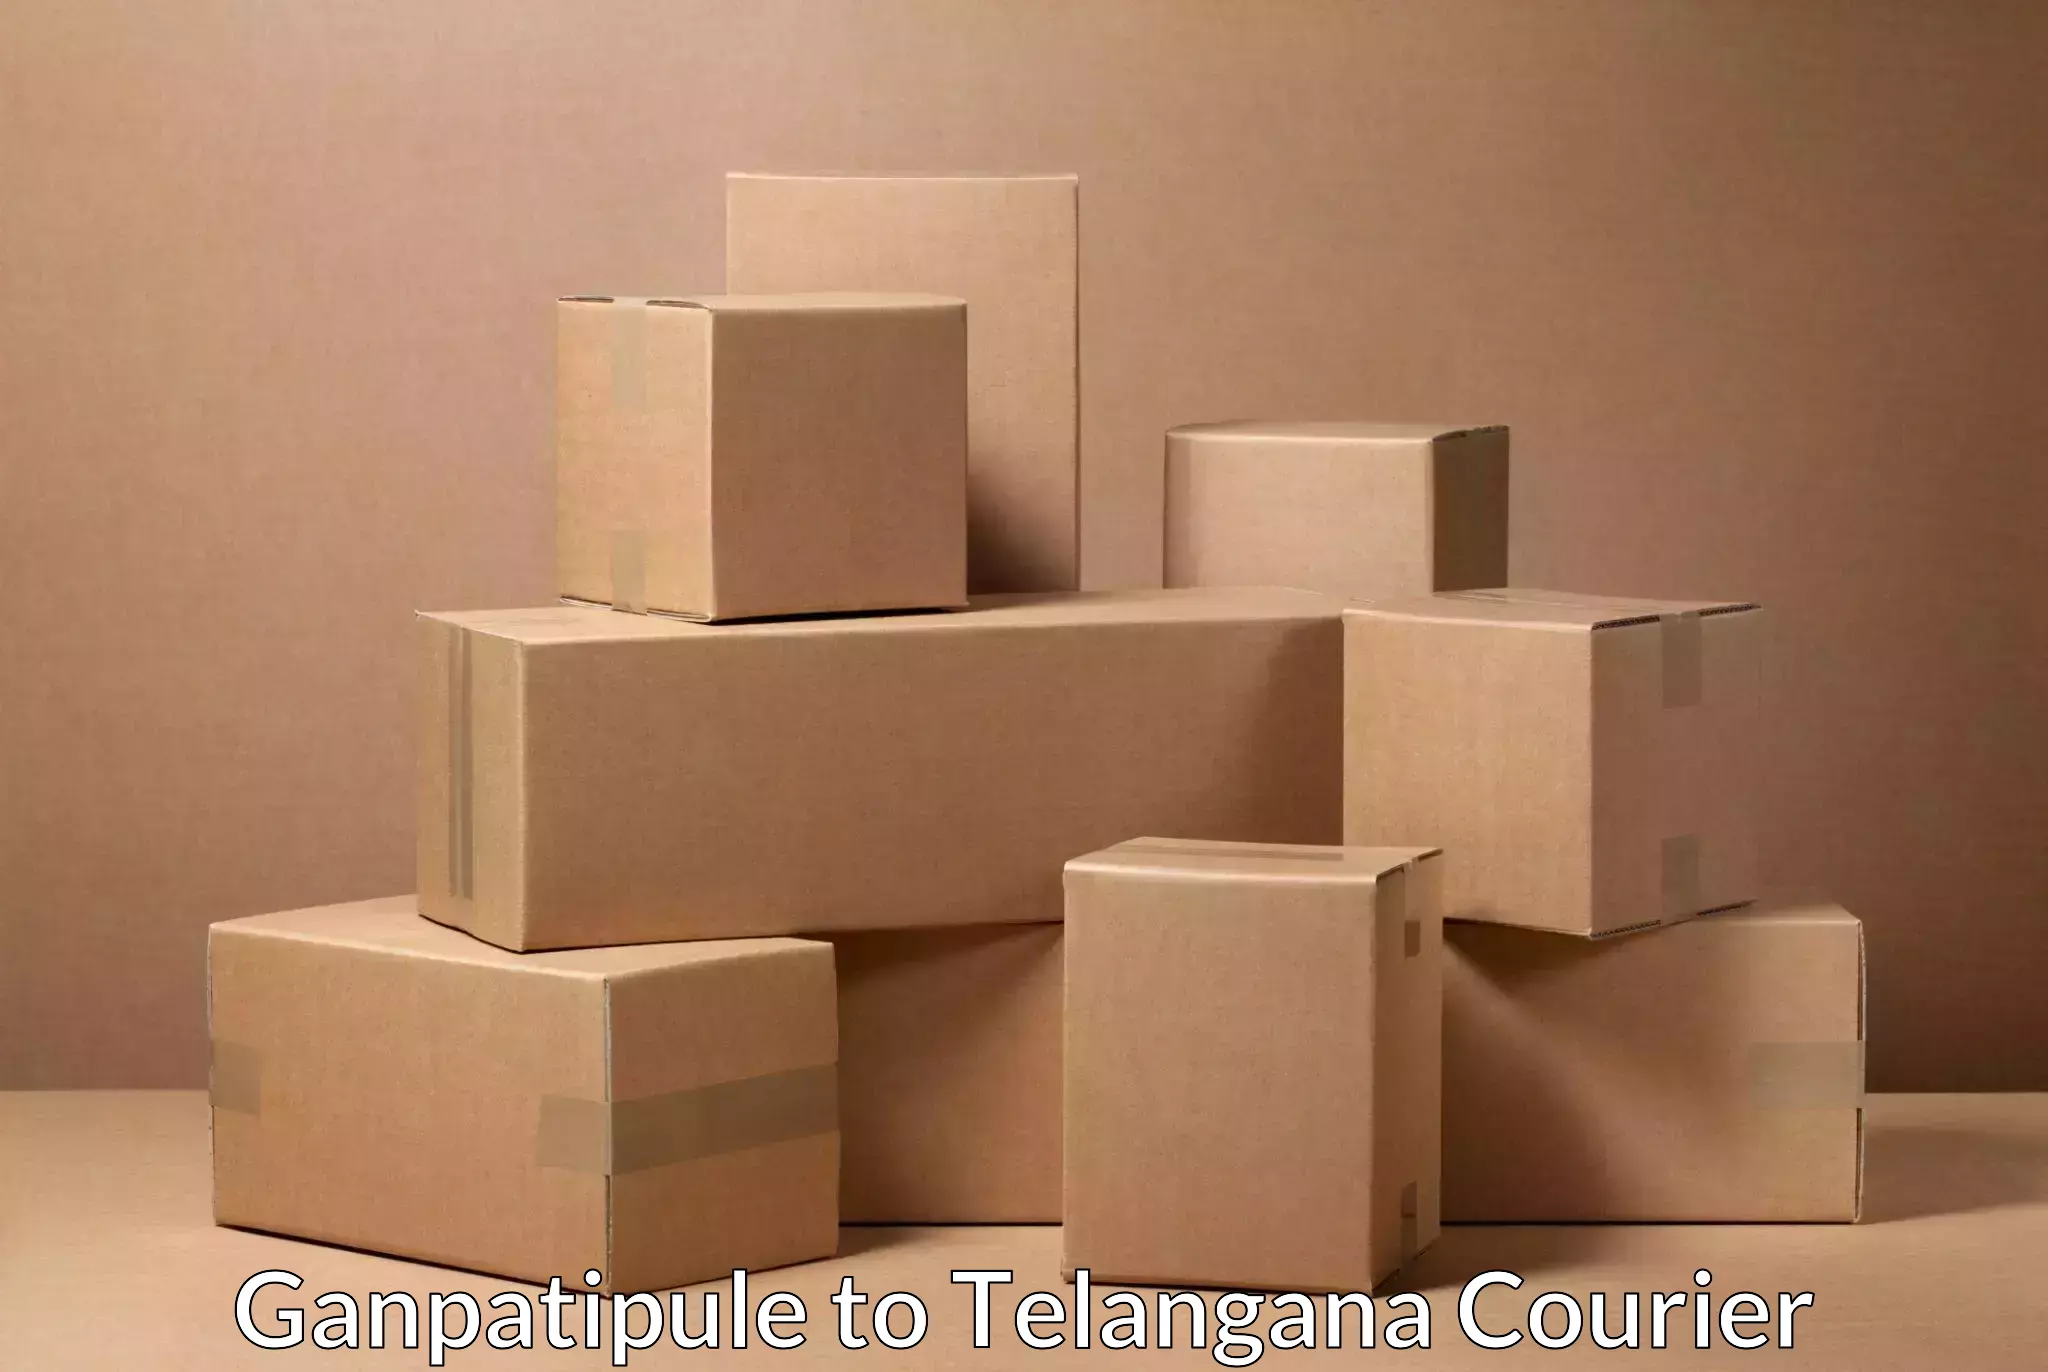 Express courier facilities Ganpatipule to Telangana